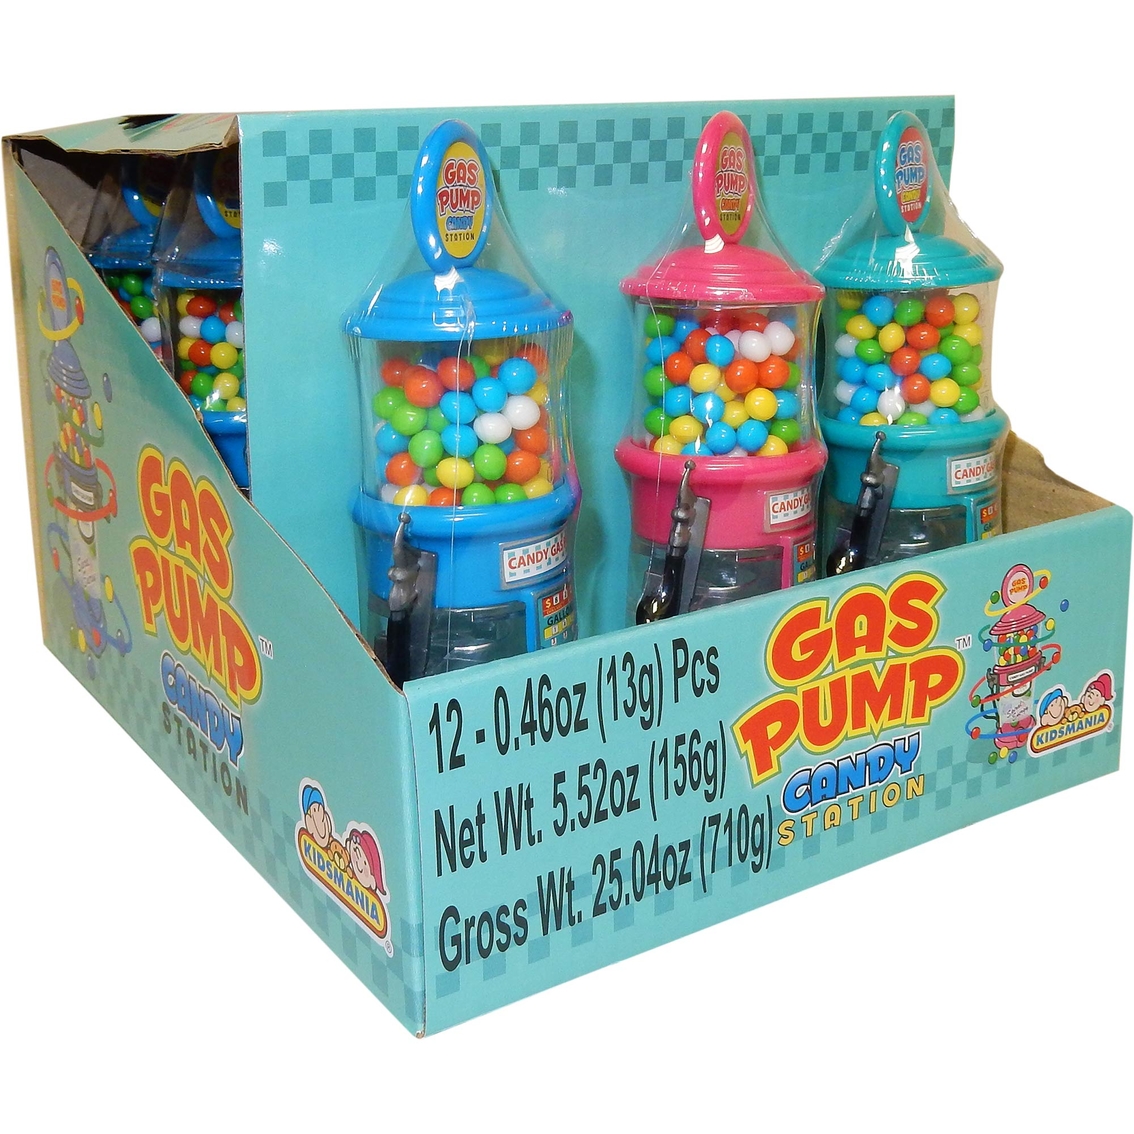 Kidsmania Gas Pump Candy Station 12 pk. - Image 2 of 2